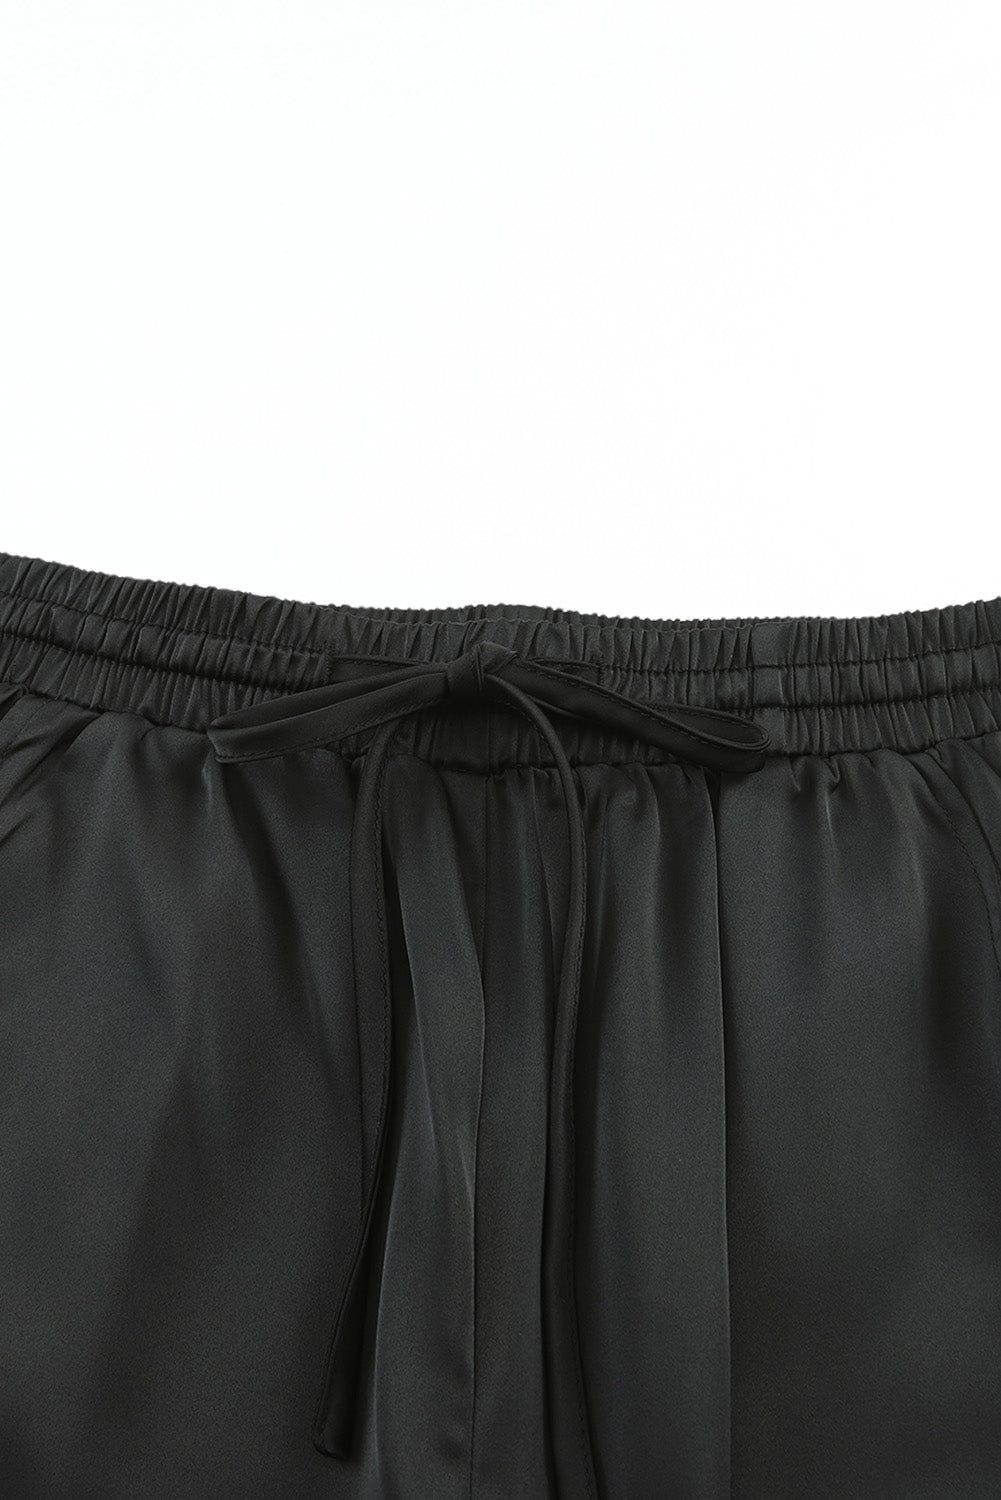 Black Satin Pocketed Drawstring Elastic Waist Pants-11